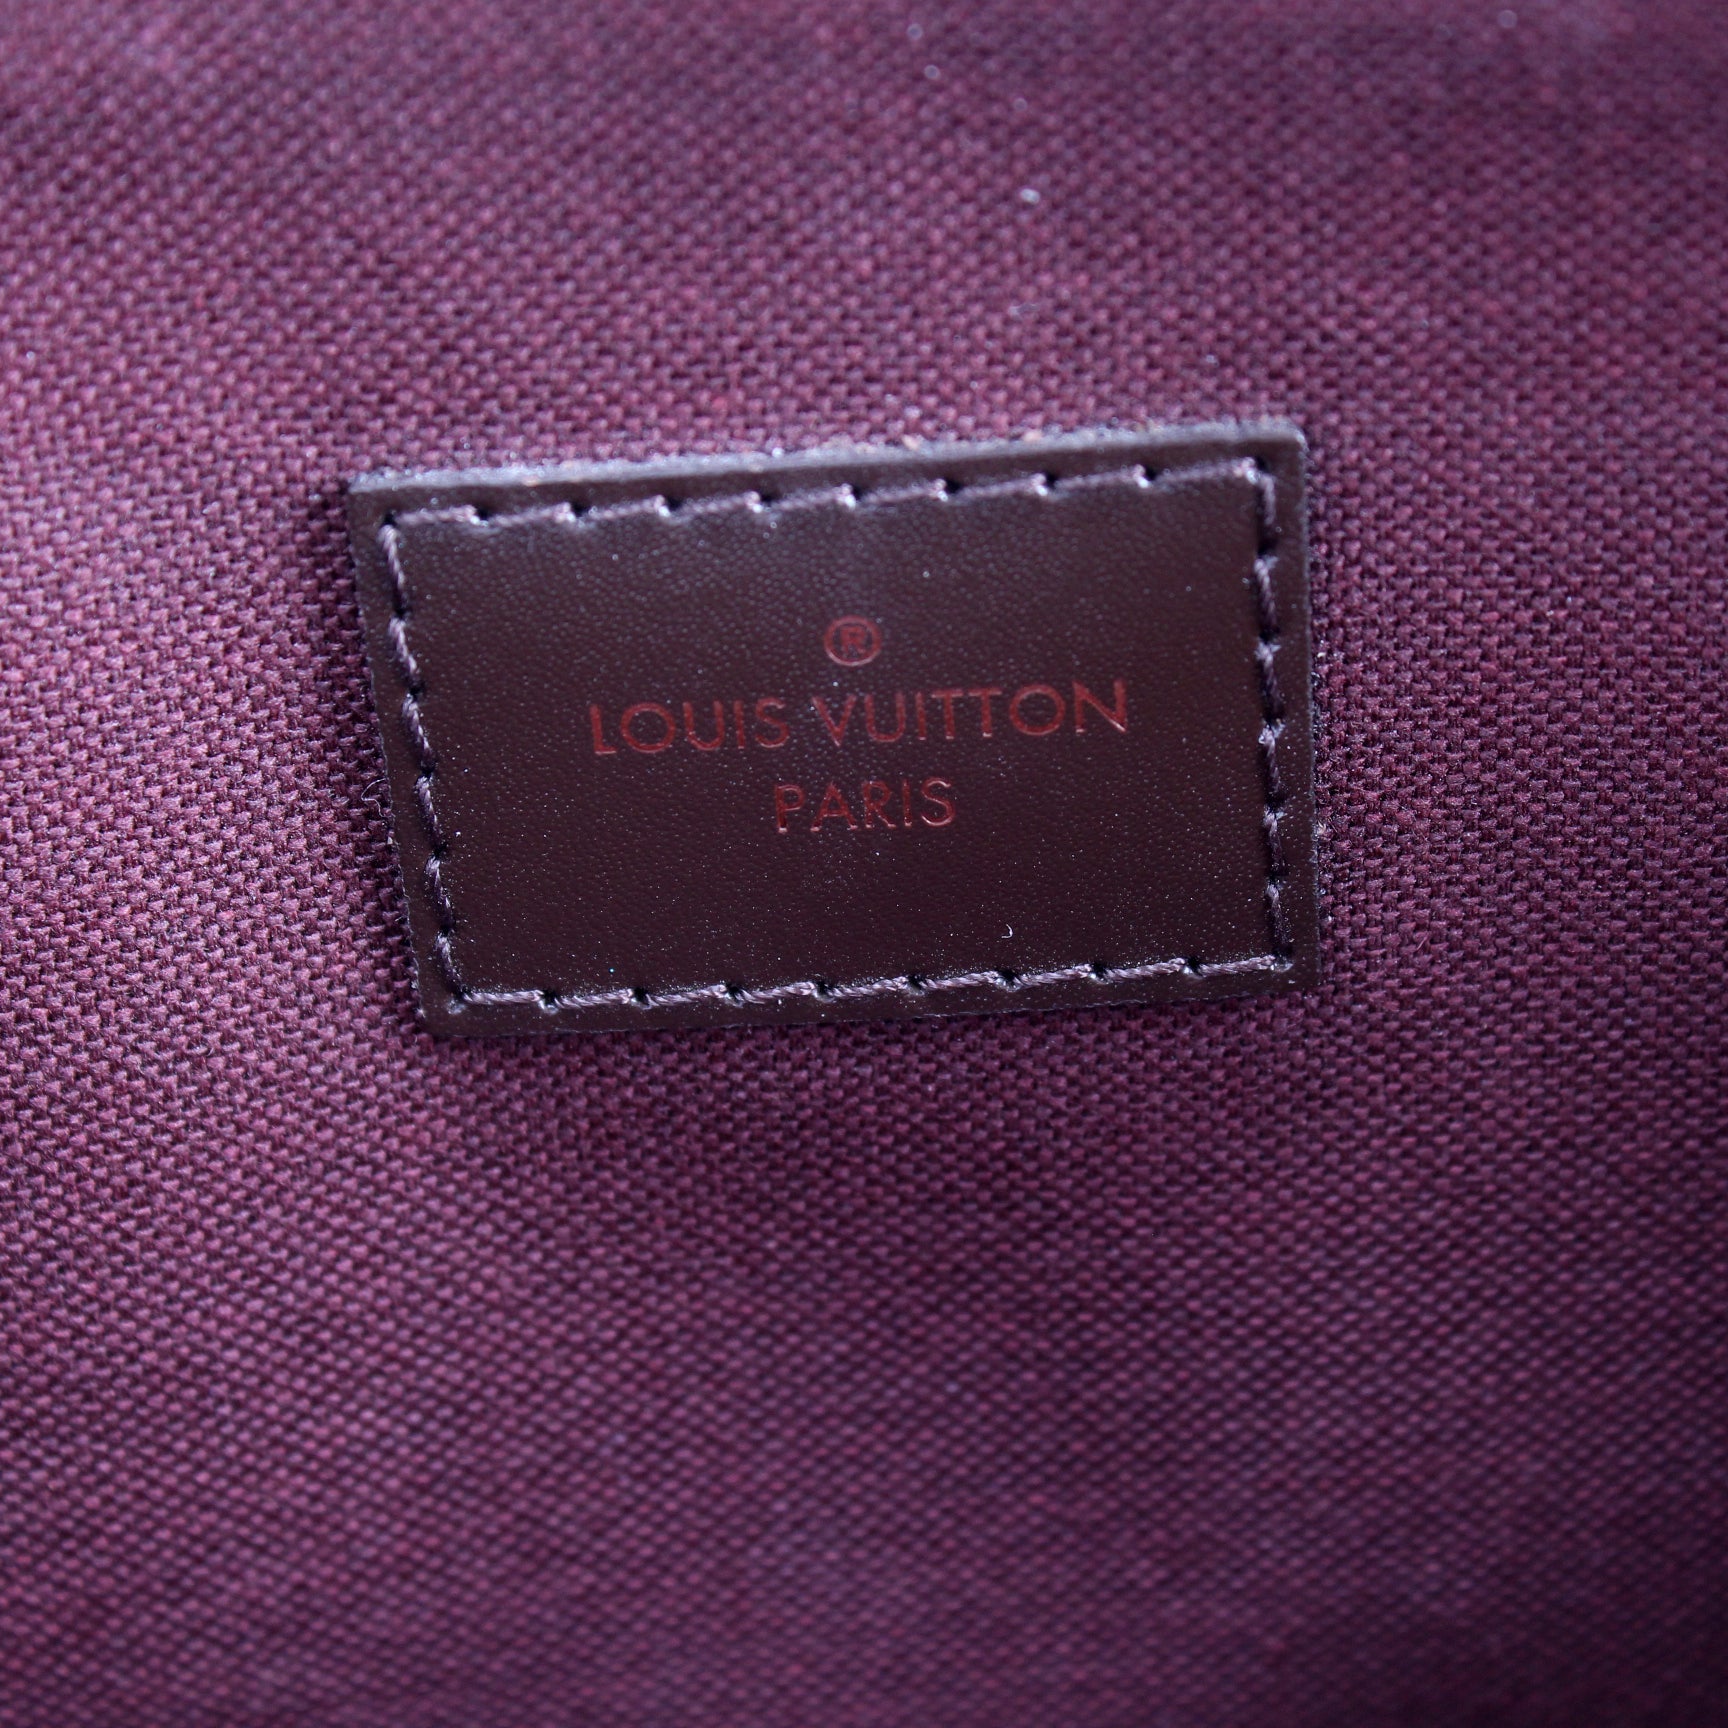 Louis Vuitton Hoxton Pm Reviews